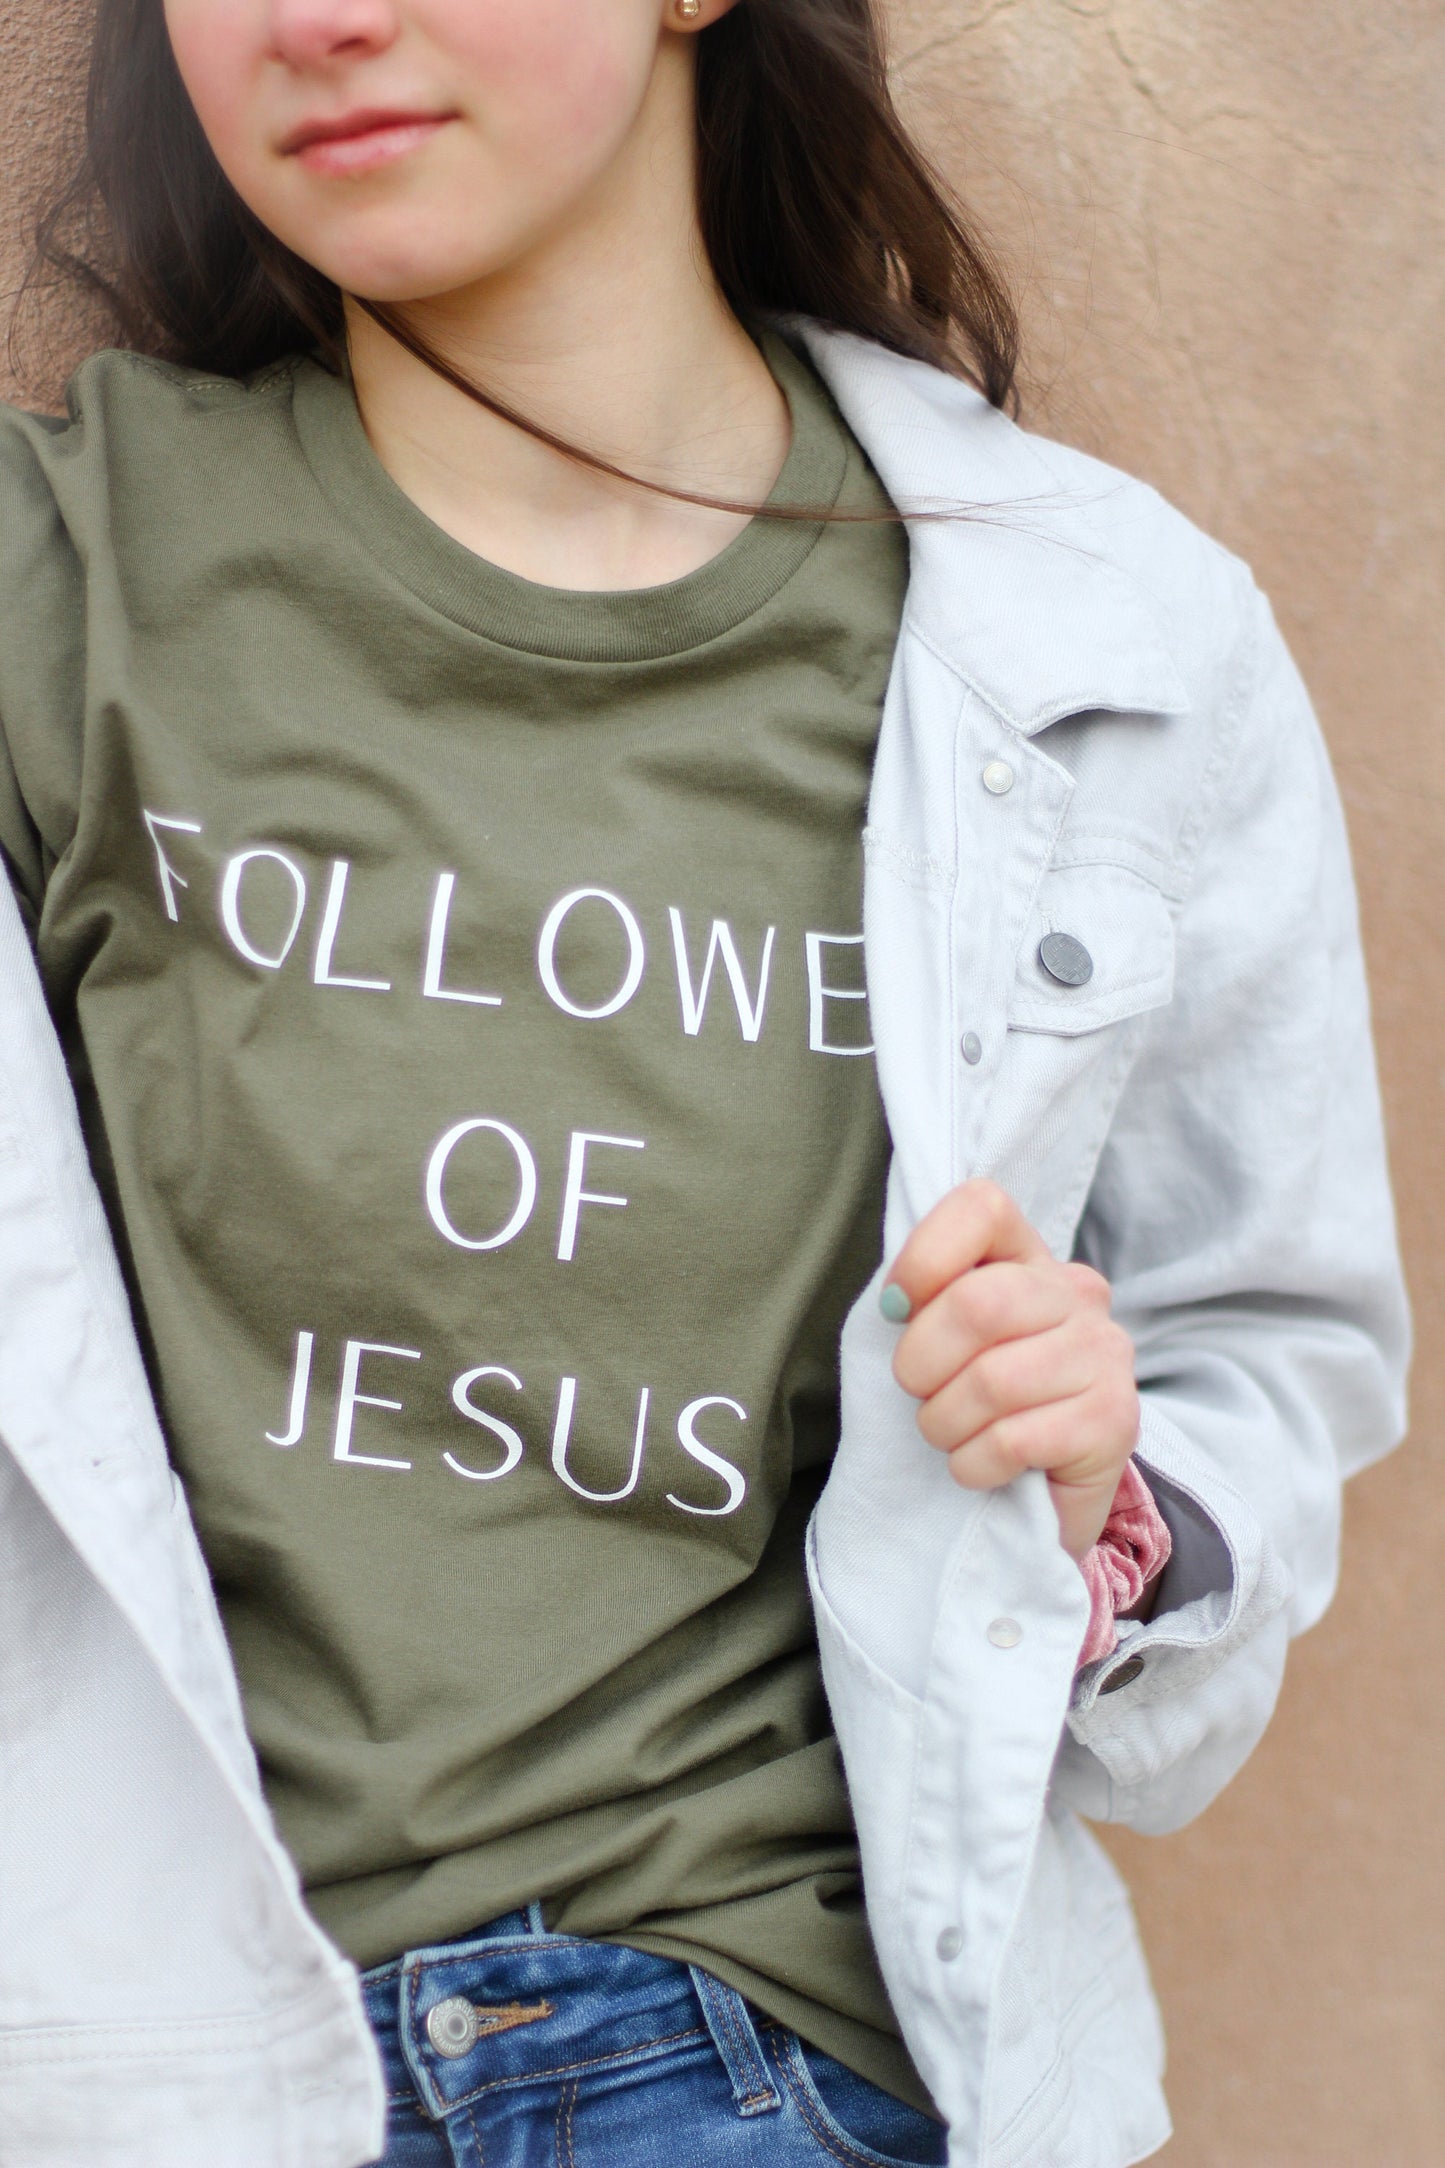 FOLLOWER OF JESUS - Army Green Unisex T-shirt